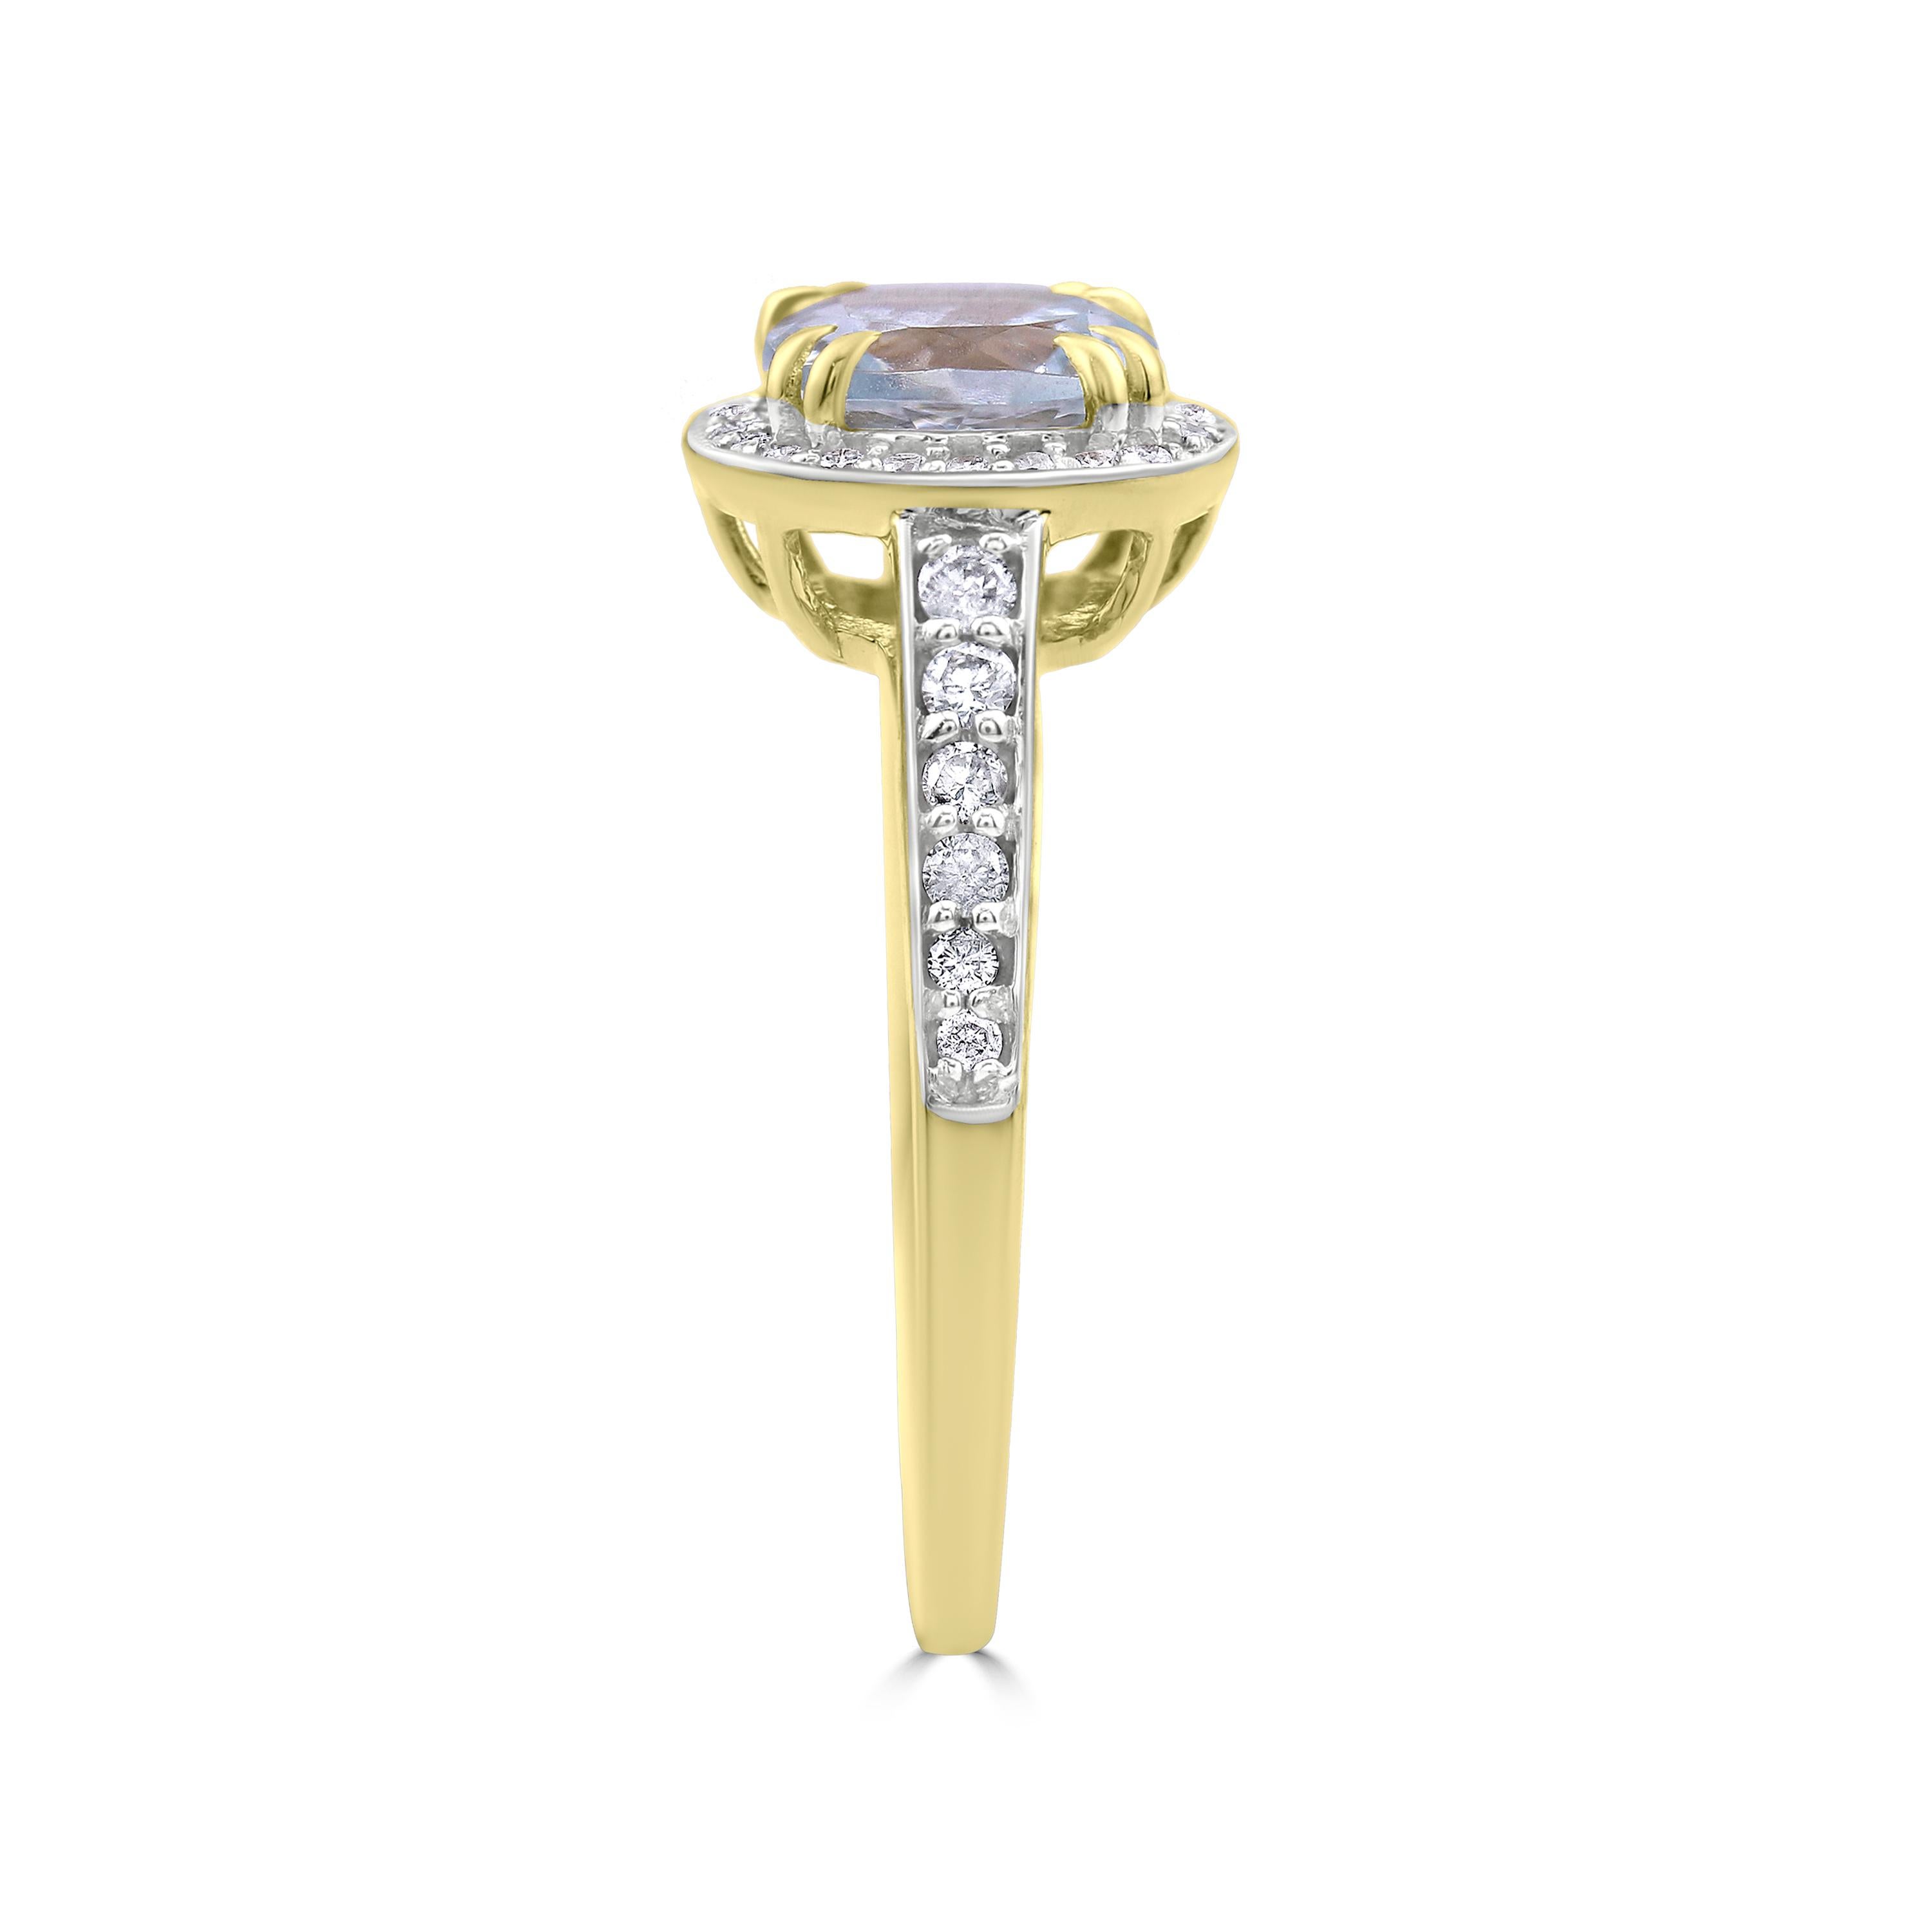 Gemistry 1.3 Carat Cushion Aquamarine Halo Solitaire Diamond Ring in 14K Gold 5